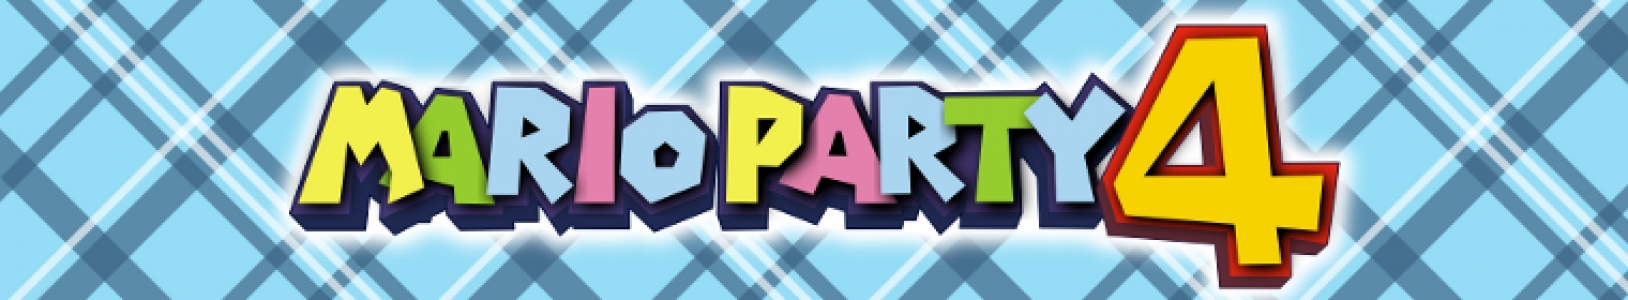 Mario Party 4 banner